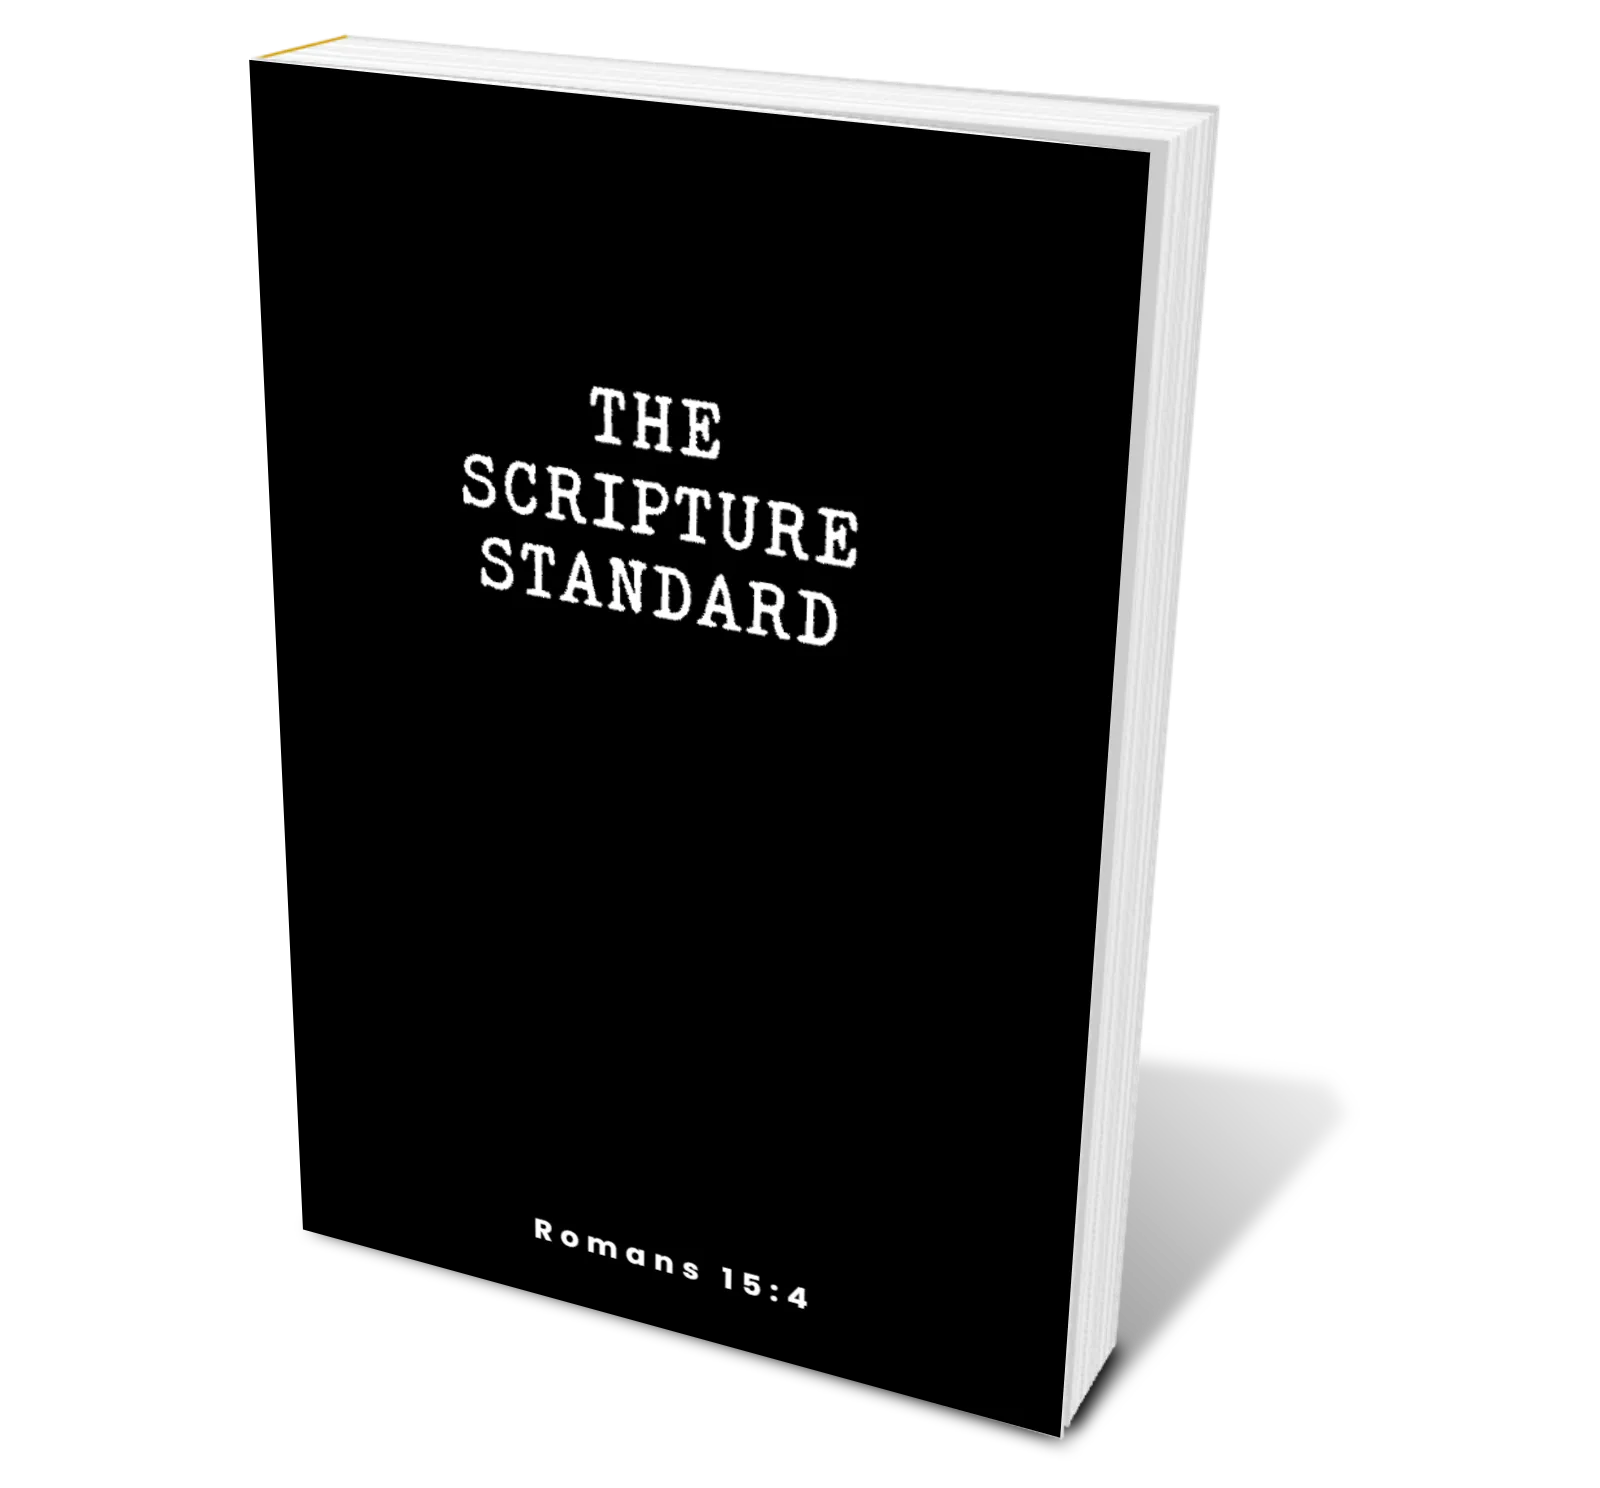 The Scripture Standard by sisteradmn